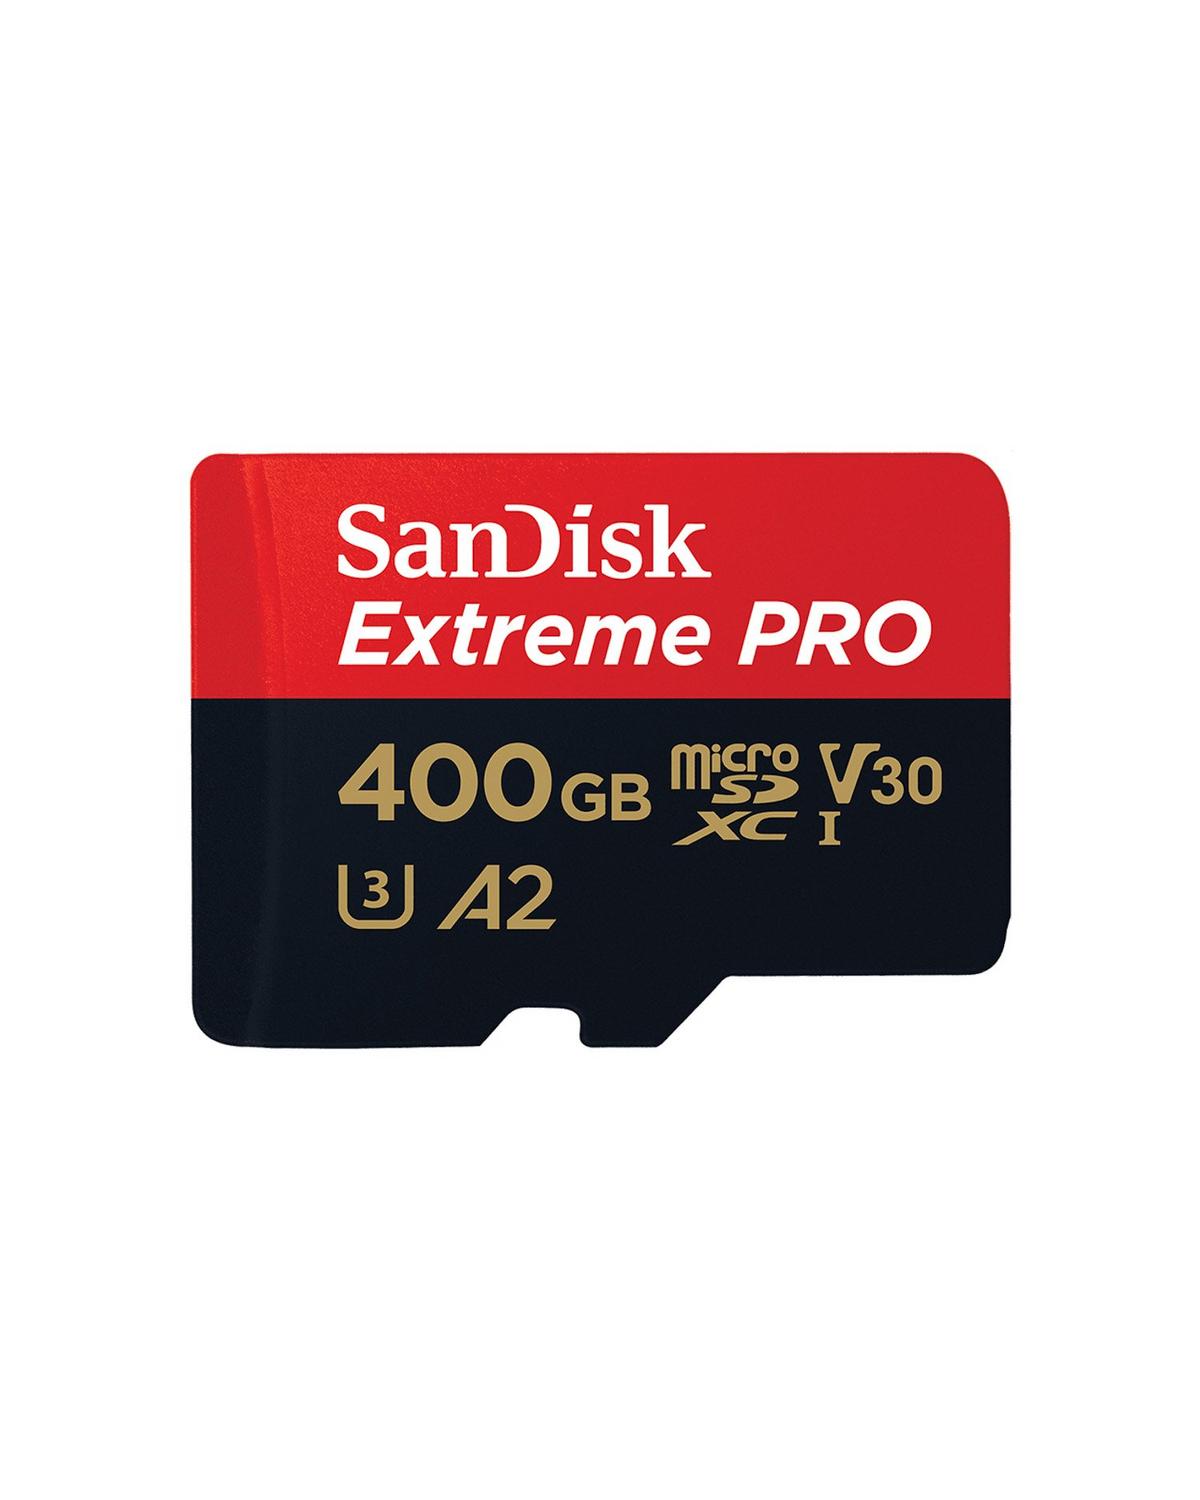 Sandisk Extreme Pro 400GB MicroSDXC Memory card + SD Adaptor -  No Colour